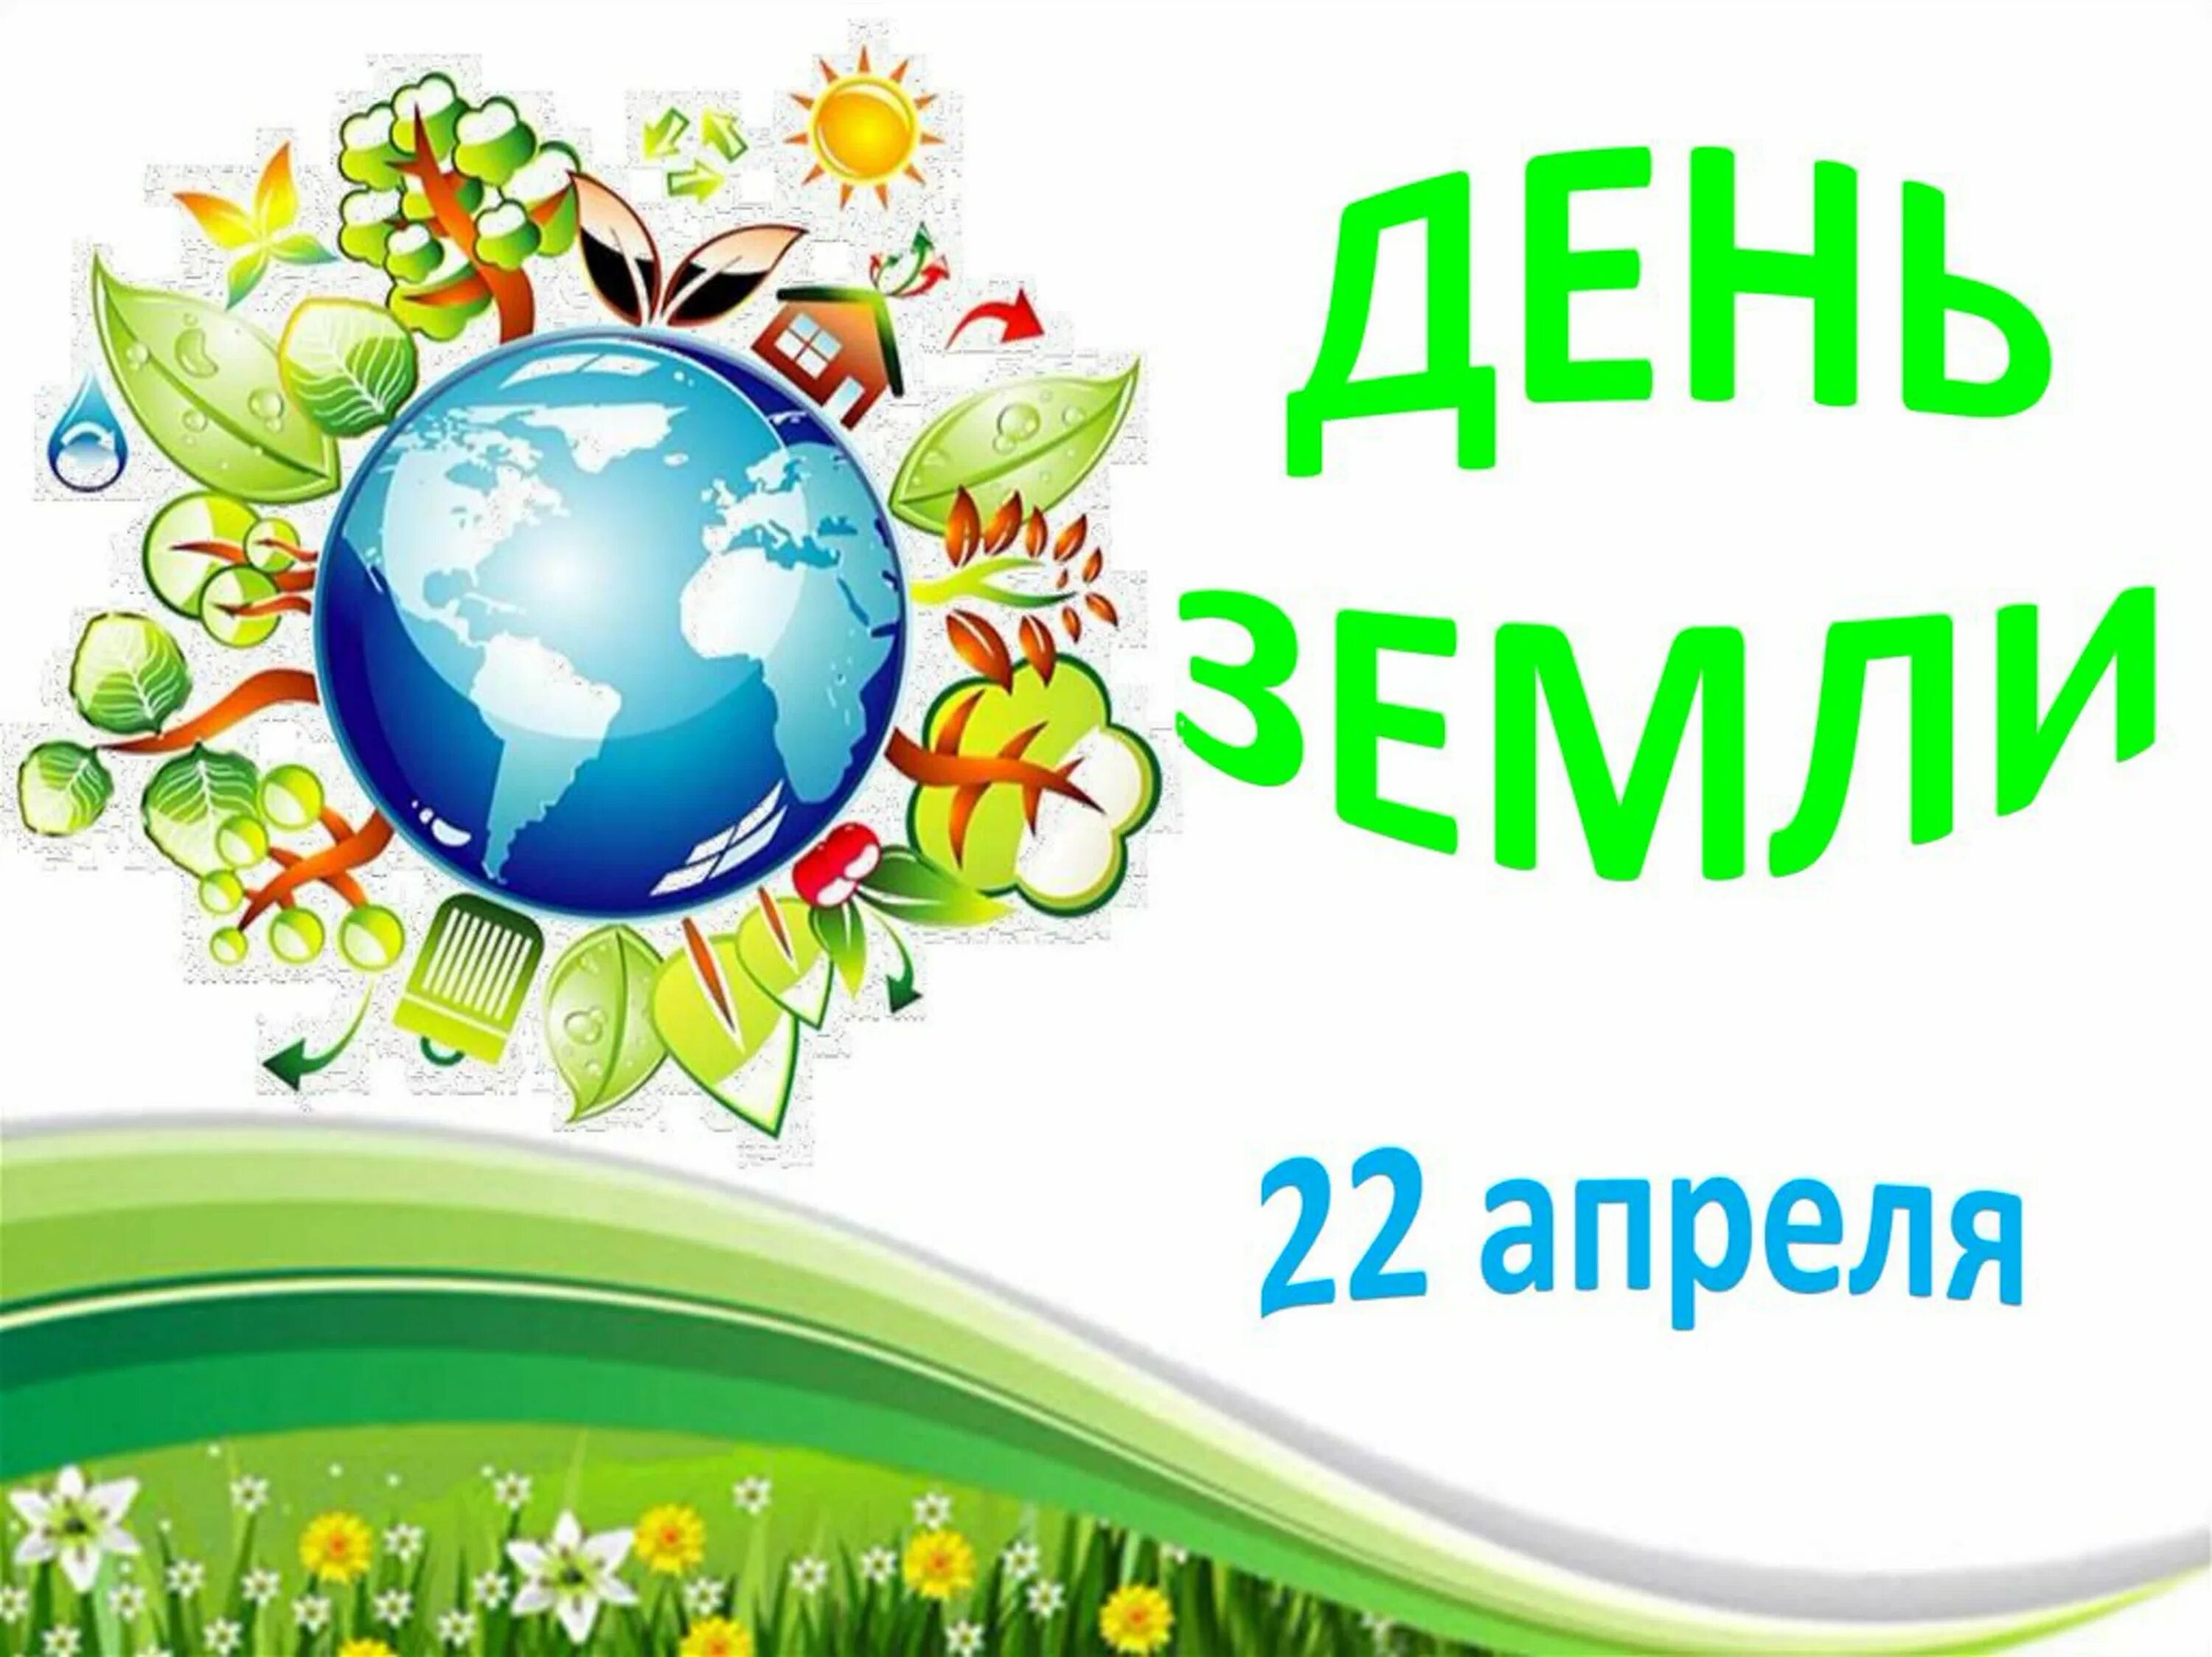 Картинки день земли 22 апреля. День земли. Акция день земли. Всемирный день земли. Надпись Всемирный день земли.